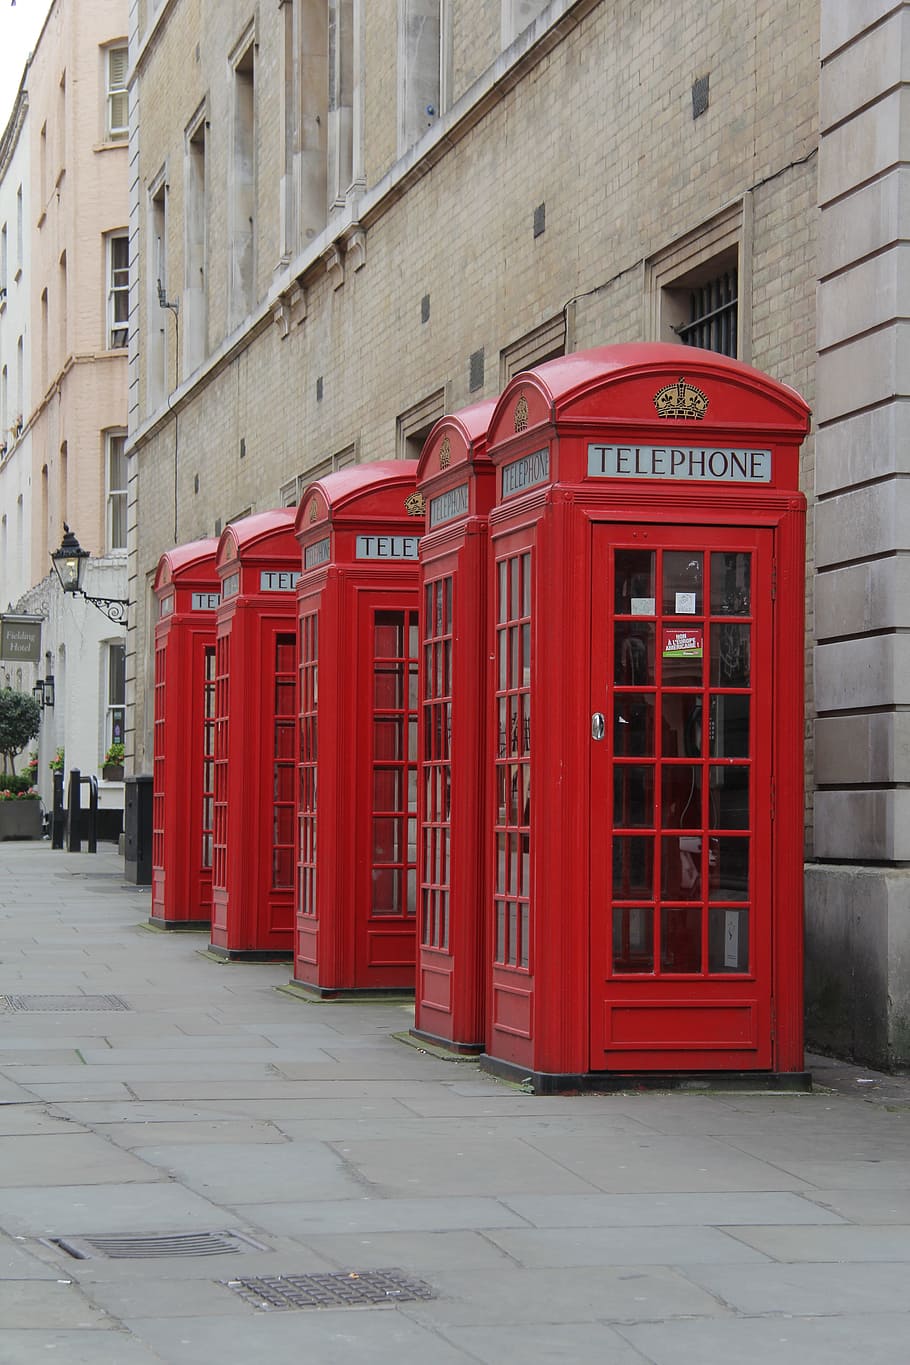 beberapa bilik telepon, kotak telepon merah, london, telepon, kotak telepon, Inggris, eksterior bangunan, arsitektur, merah, struktur bangunan